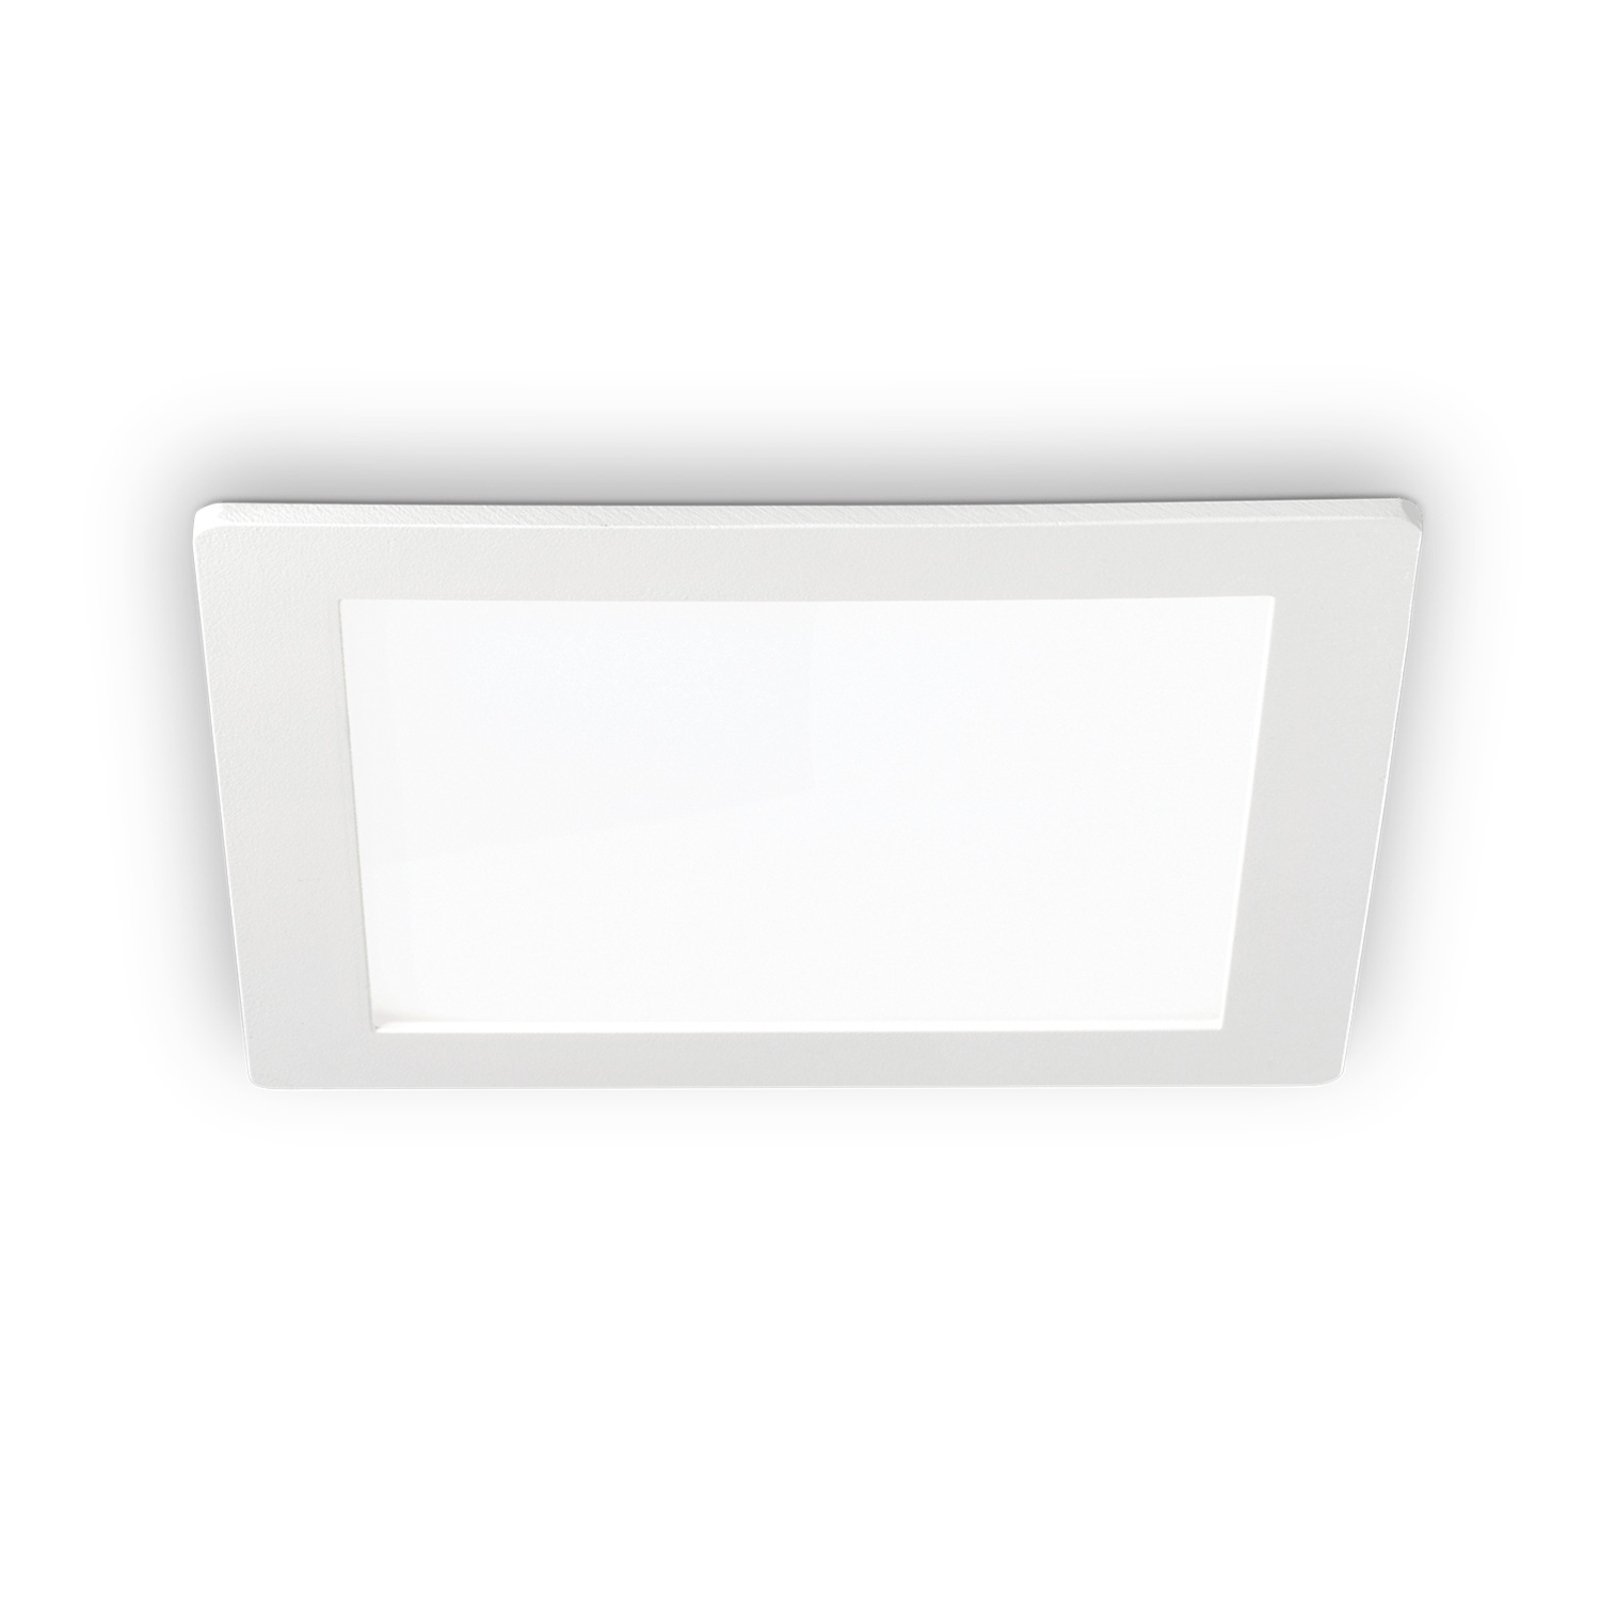 Spot LED incasso Groove square 16,8x16,8 cm